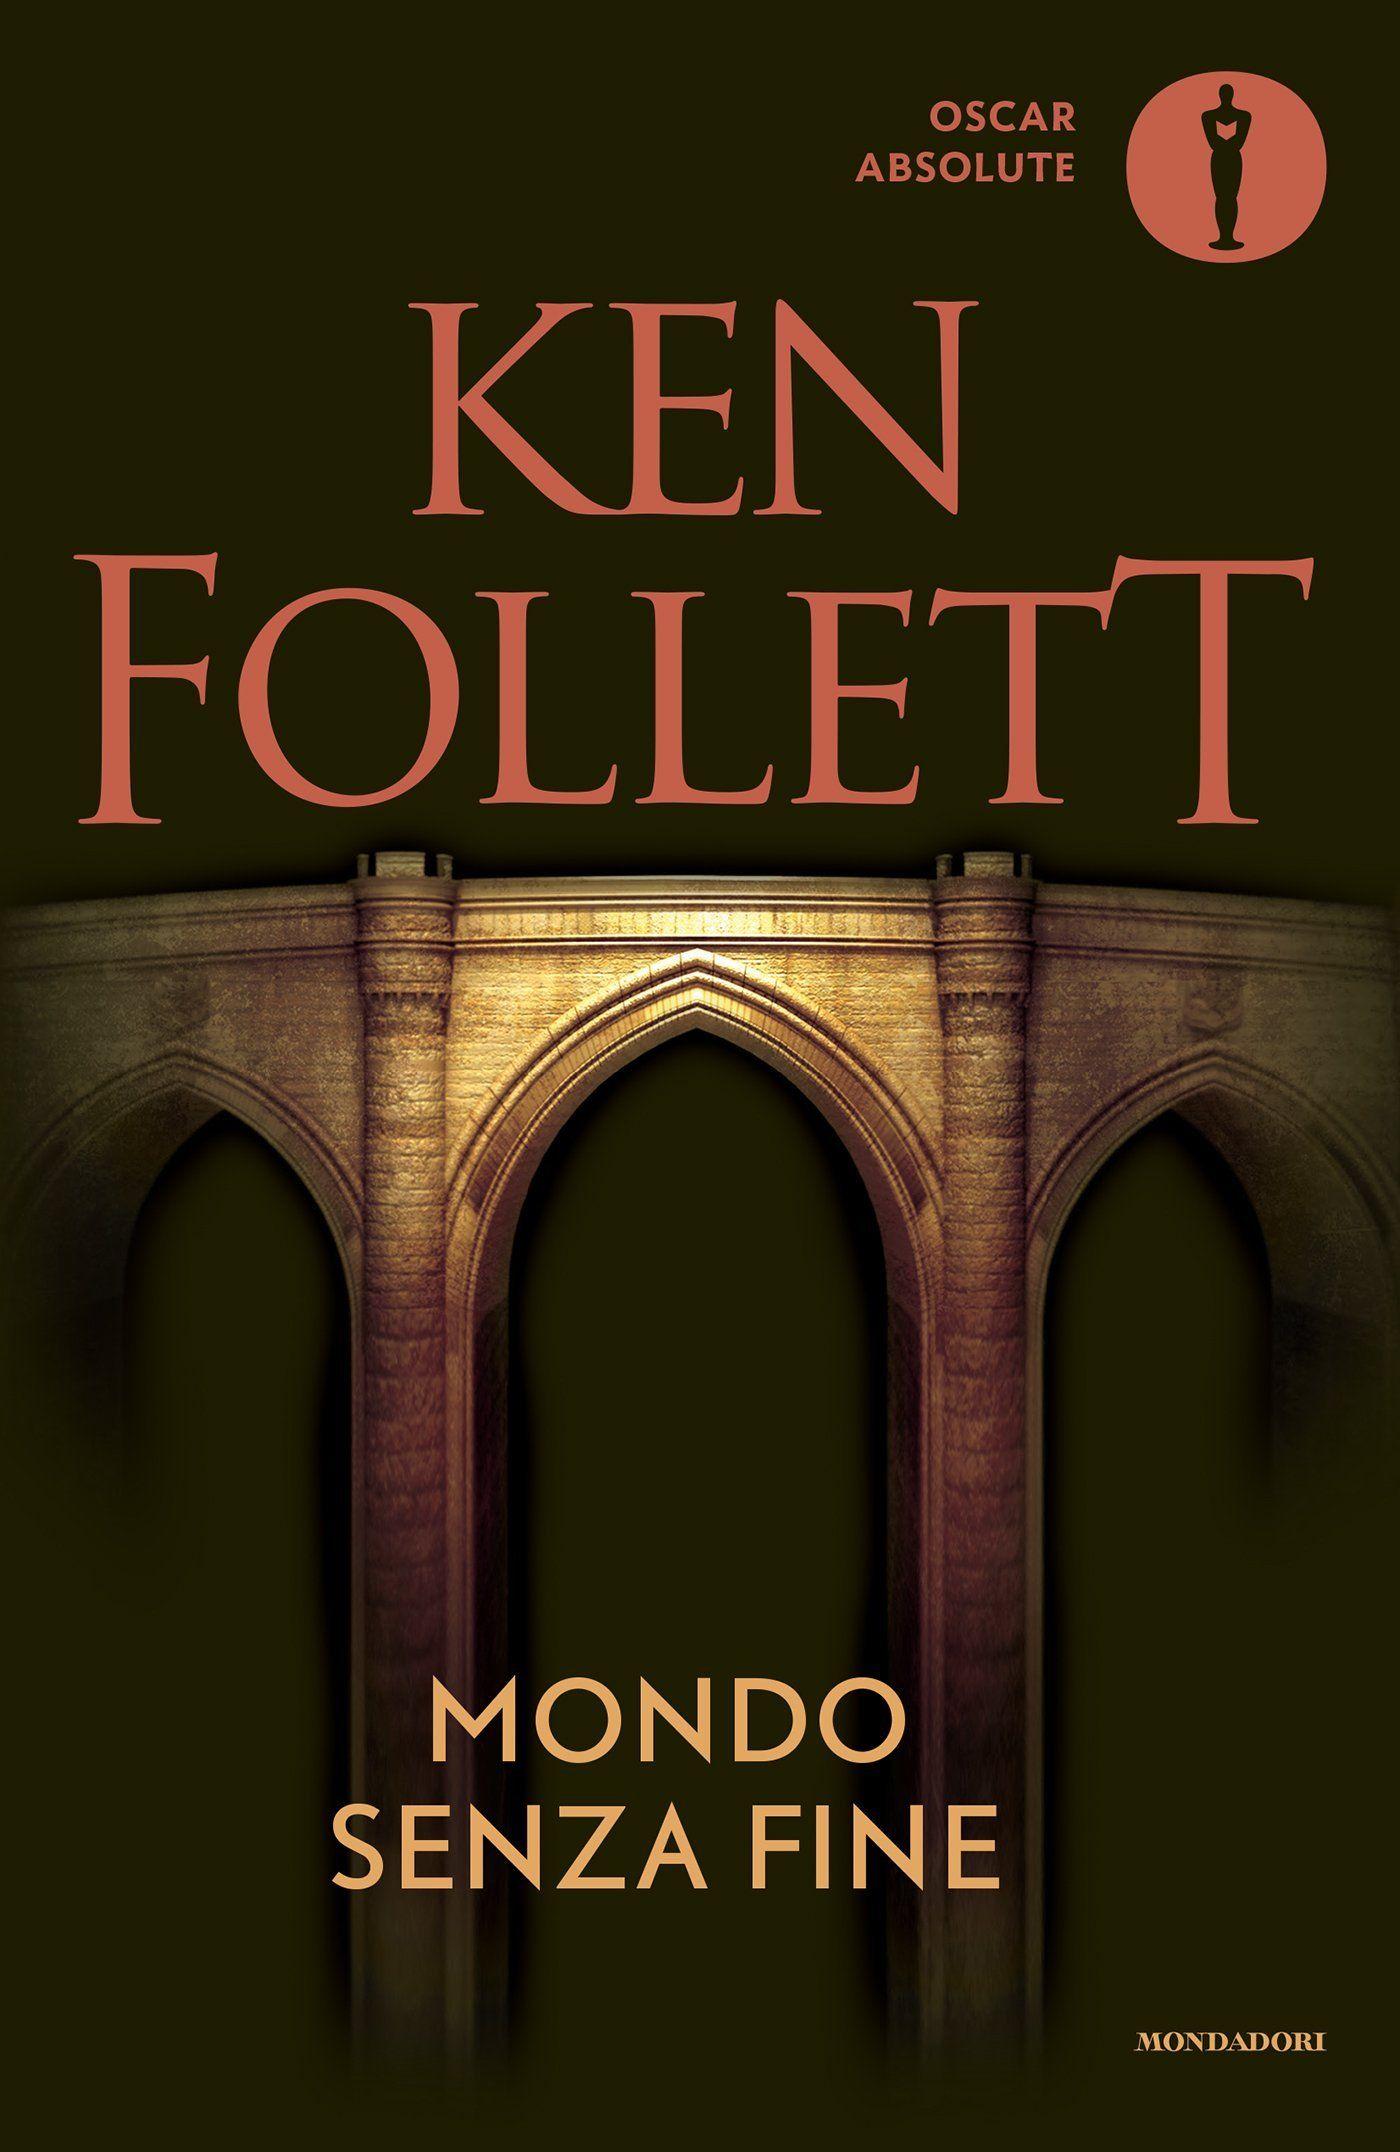 Libro "Mondo senza fine" di Ken Follett